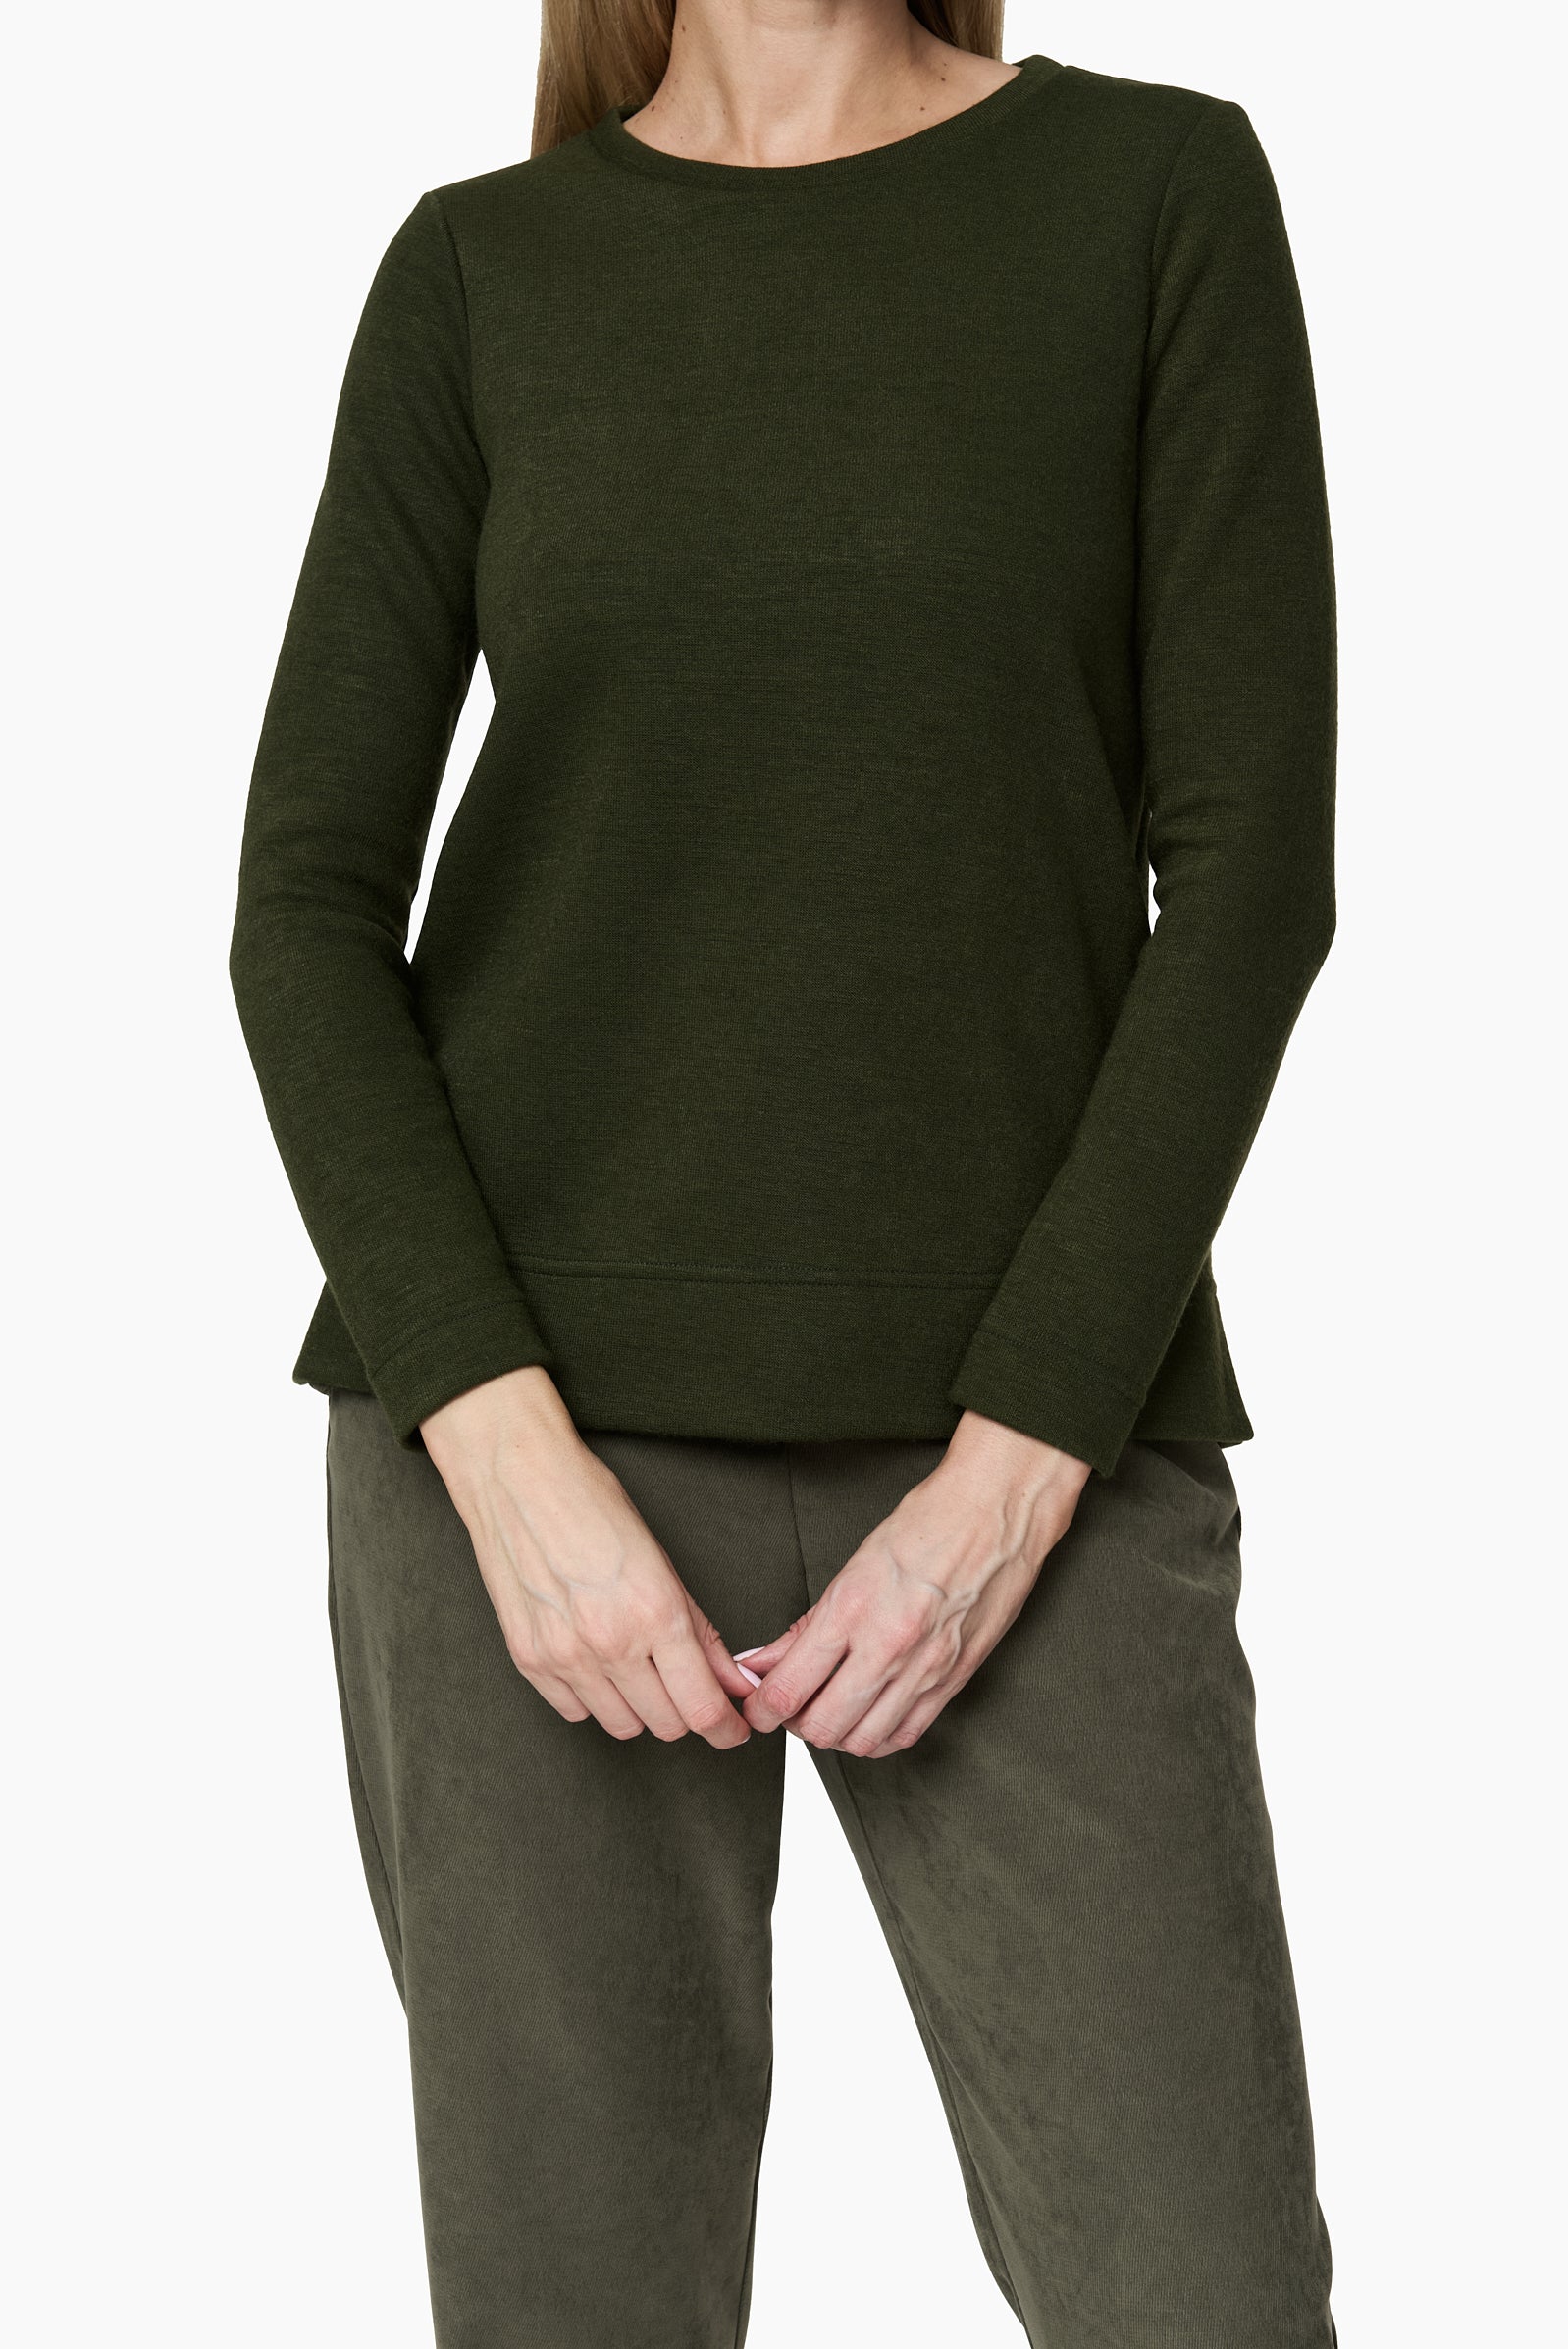 Sweater Básico Verde Militar